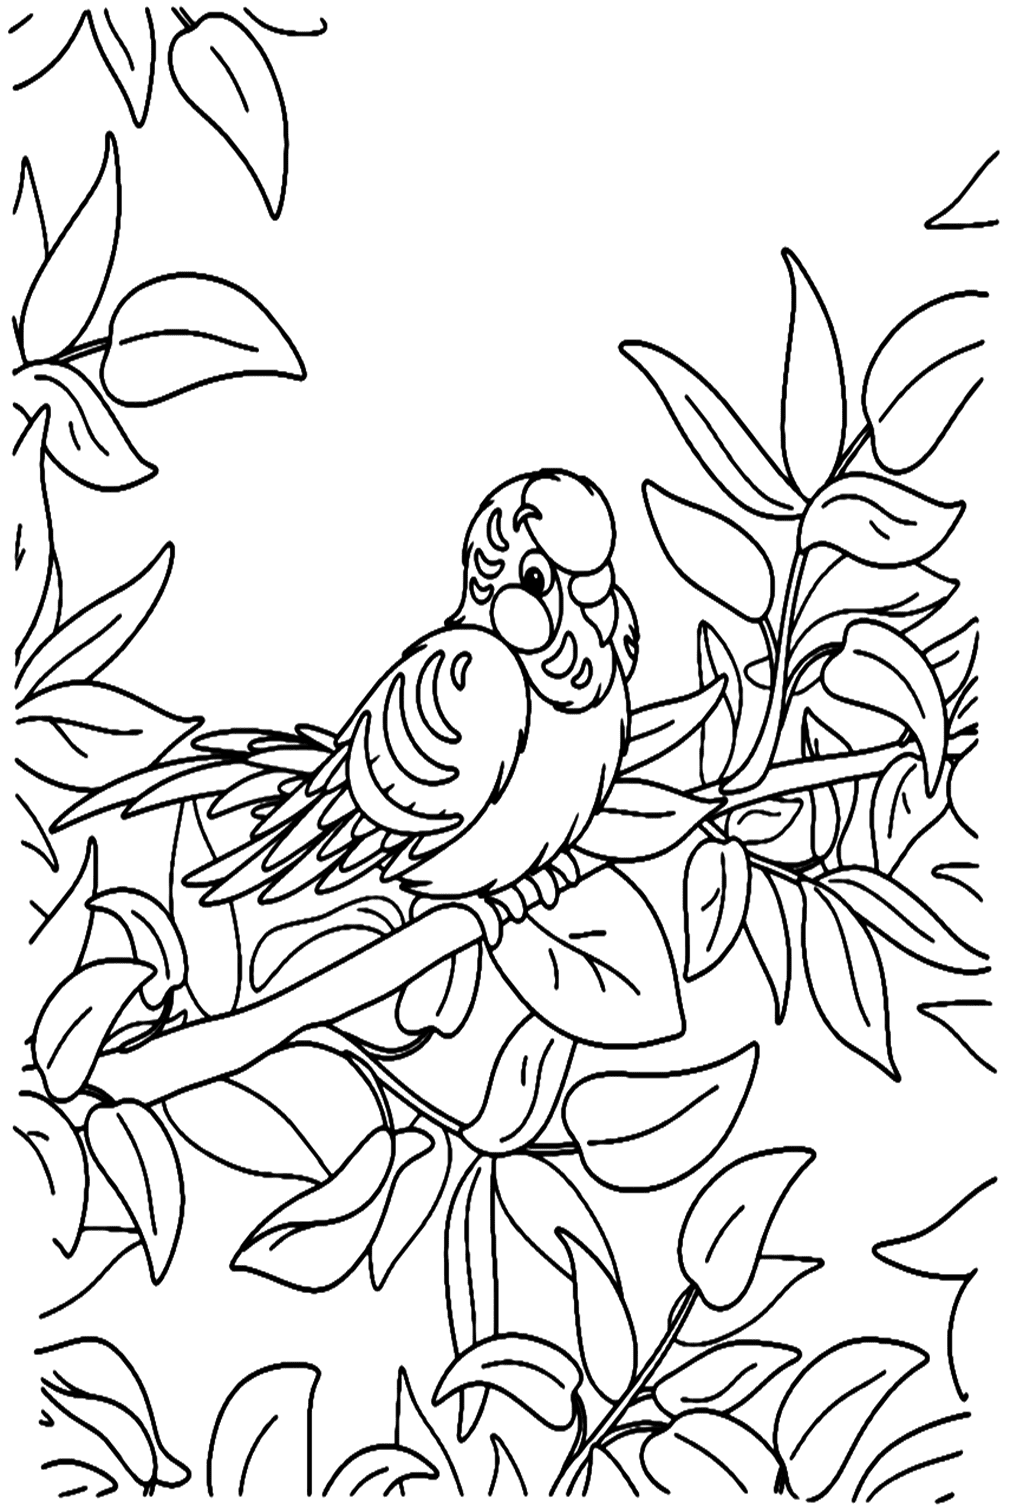 Linda página para colorear de periquito de Parakeet